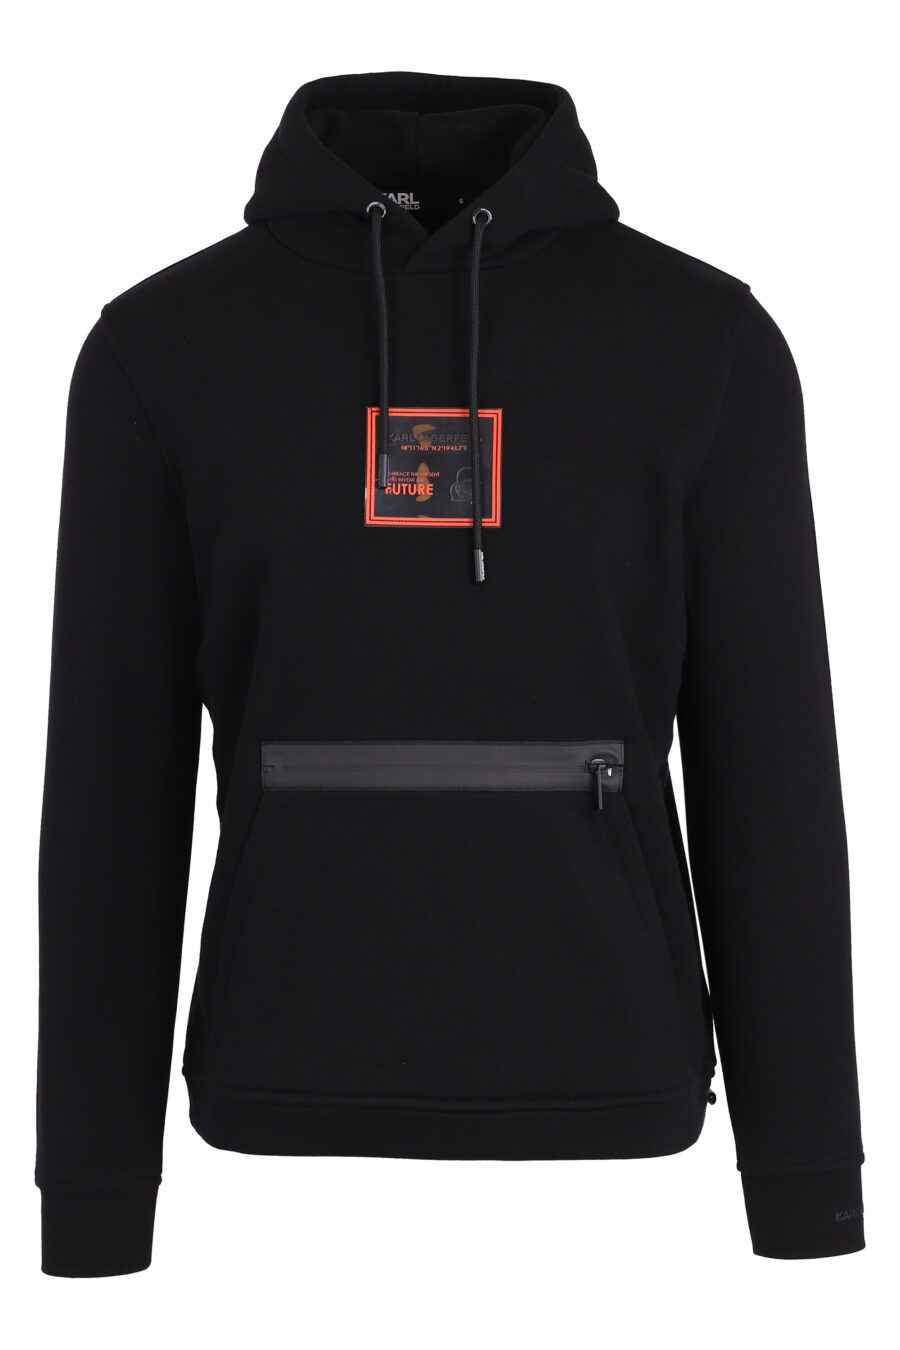 Sudadera negra con capucha y bolsillo de cremallera con logo cuadro naranja - IMG 4730